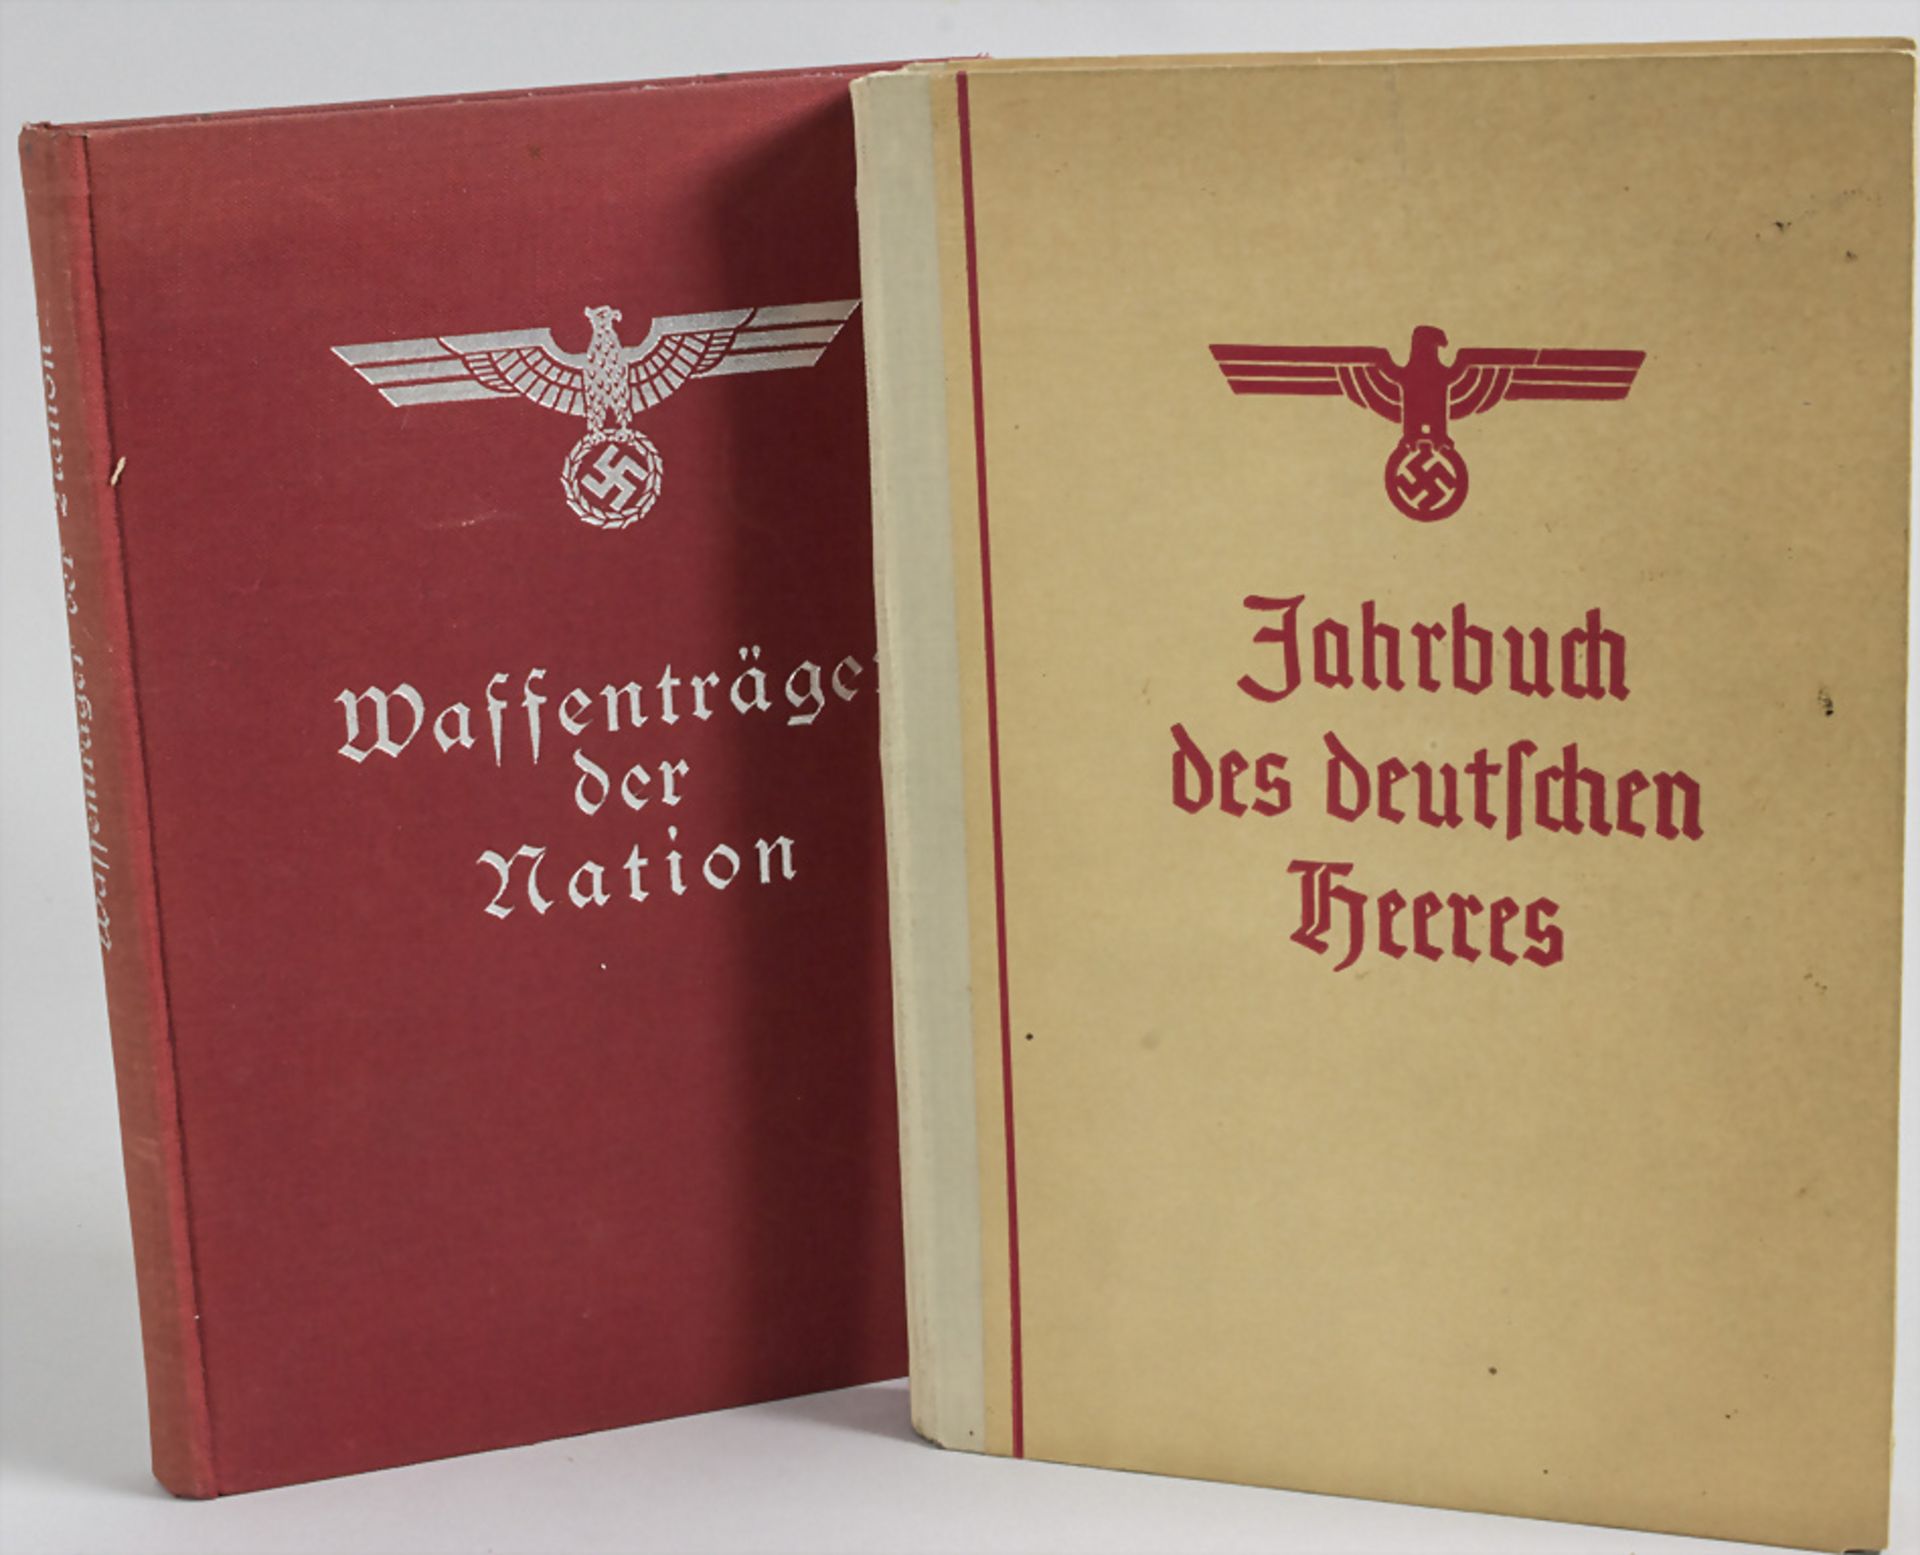 Publikationen des Deutschen Heeres / Publications of the German Army, Berlin/Leipzig, 1934 & 1940